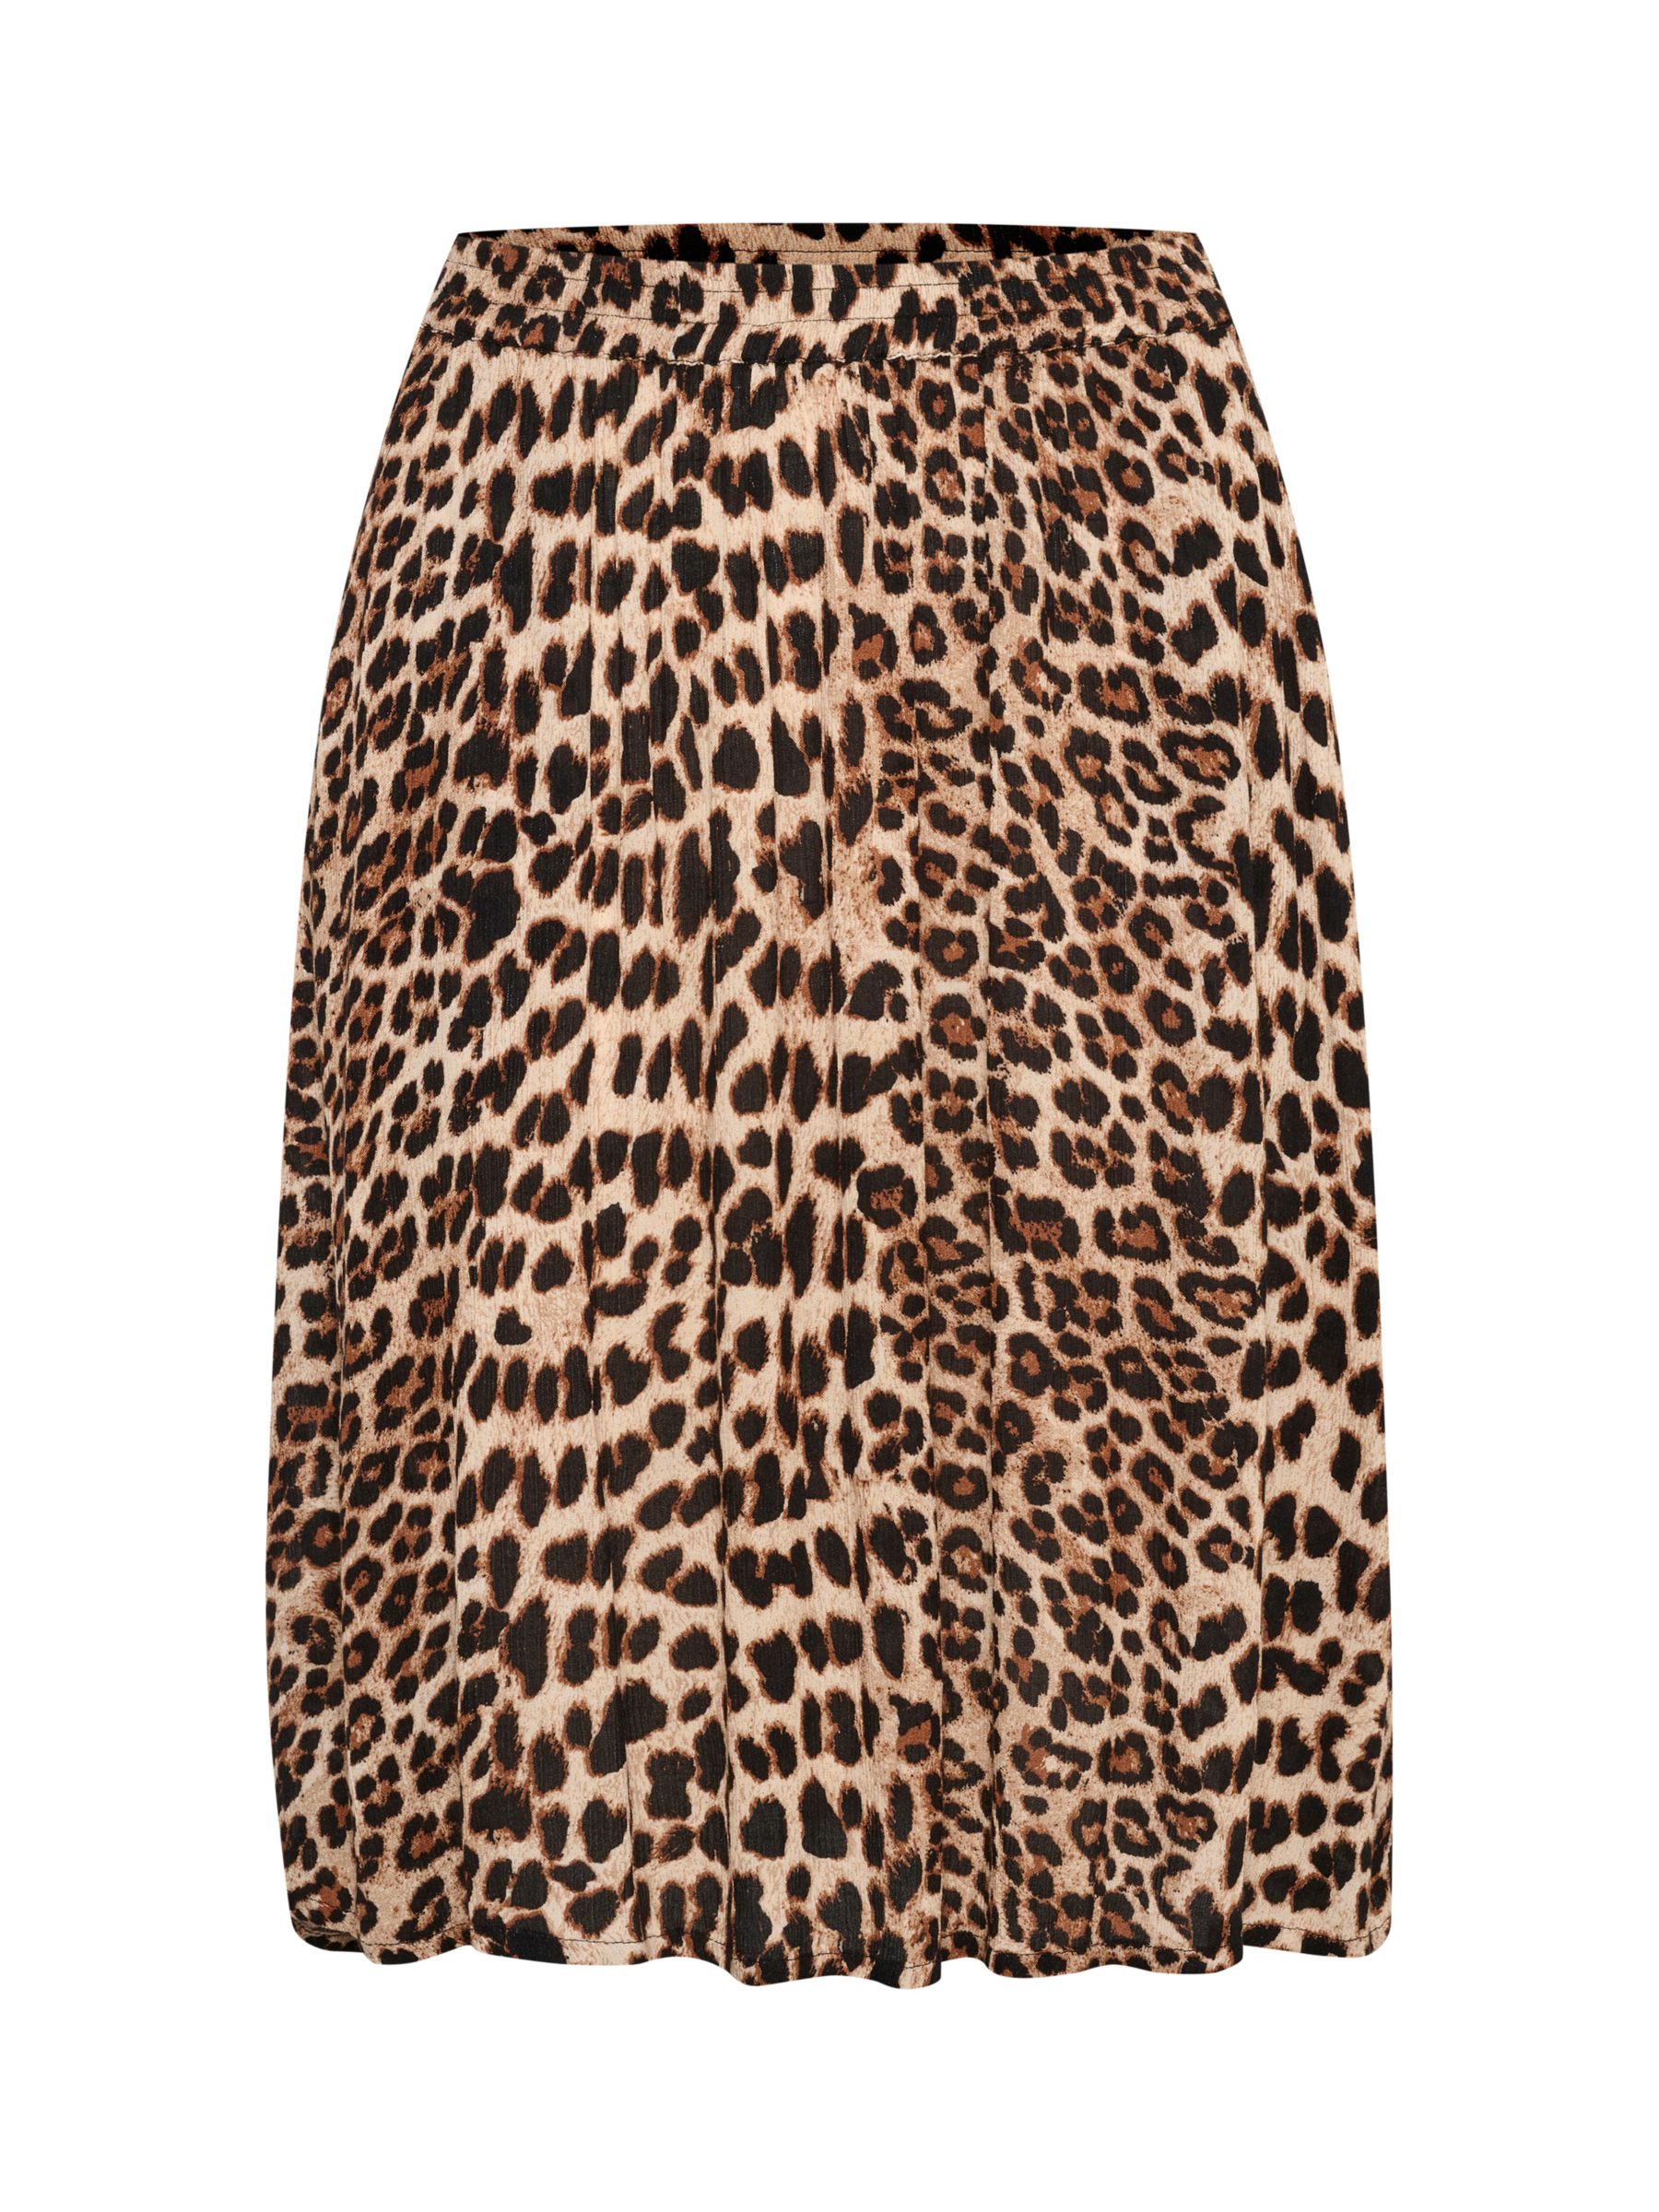 KAFFE Amber Classic Leopard Skirt, Multi, 18